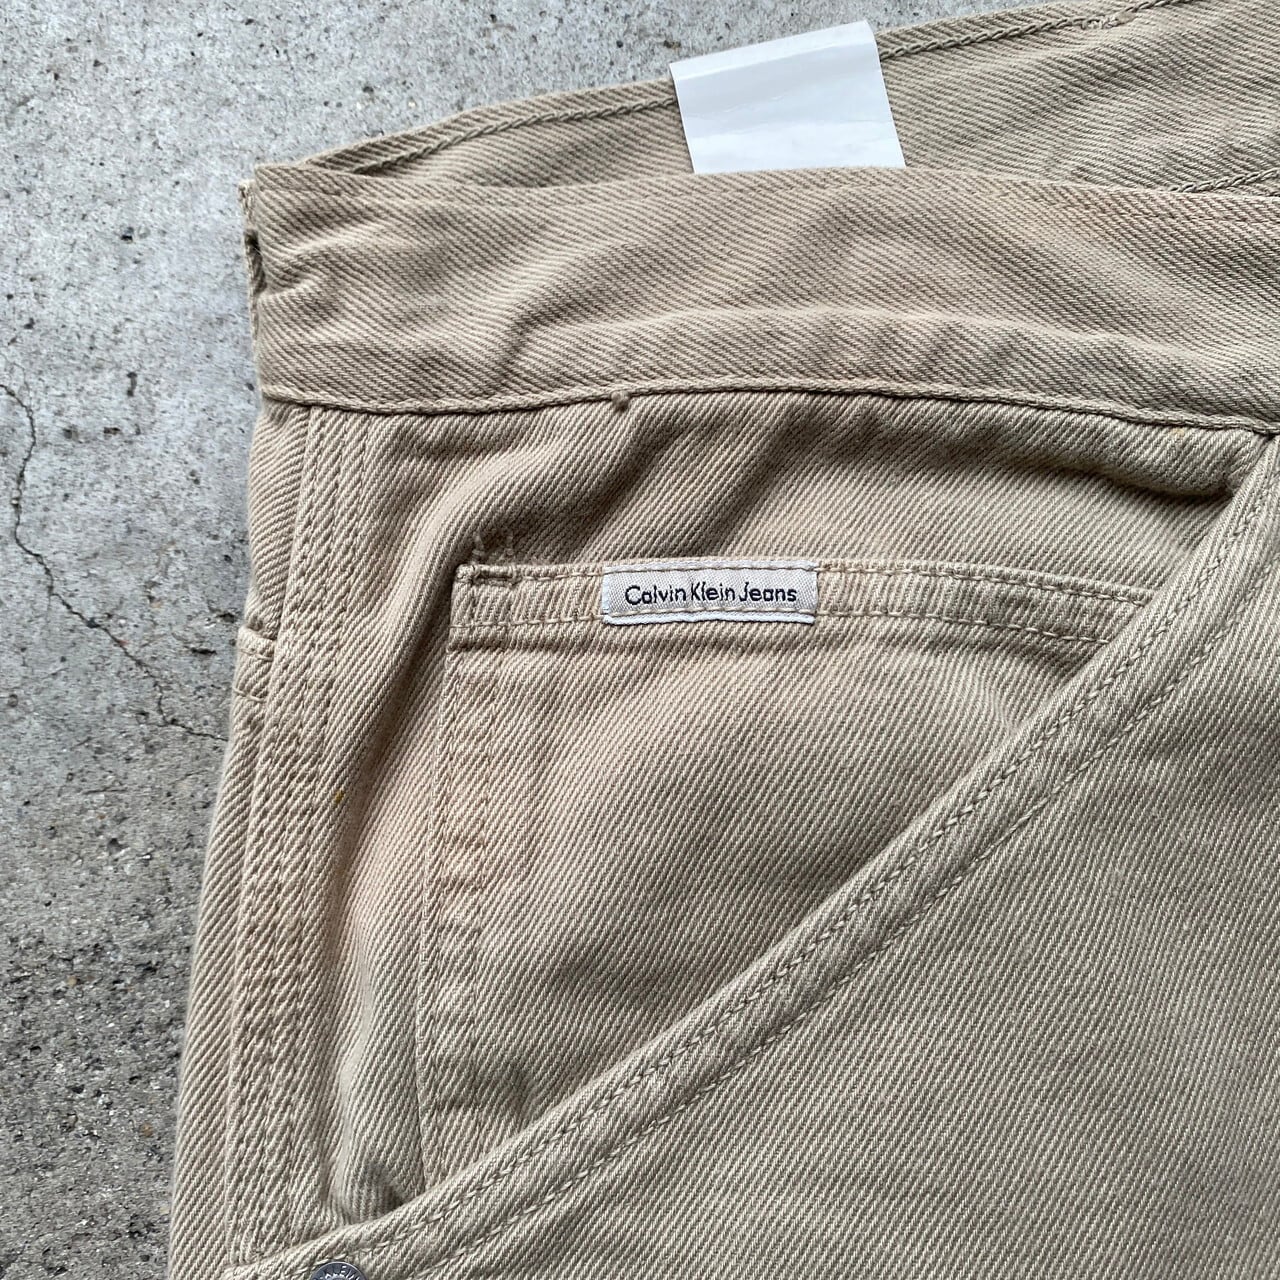 DEAD STOCK ビッグサイズ 90年代 USA製 Calvin Klein Jeans カラー ...